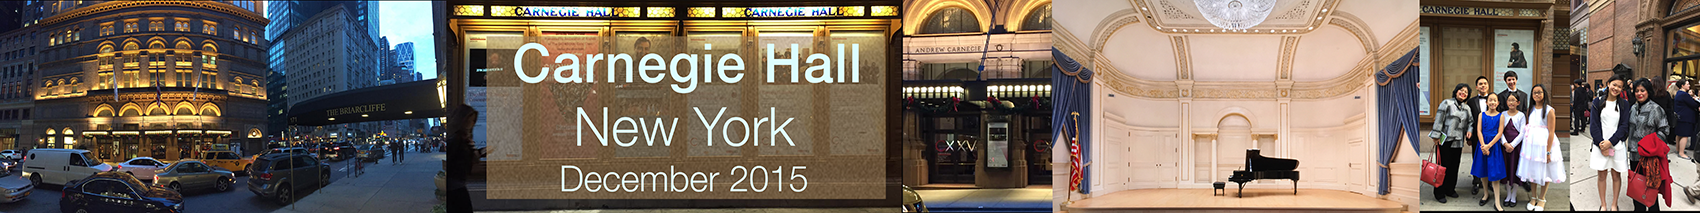 Carnegie Hall New York 2015